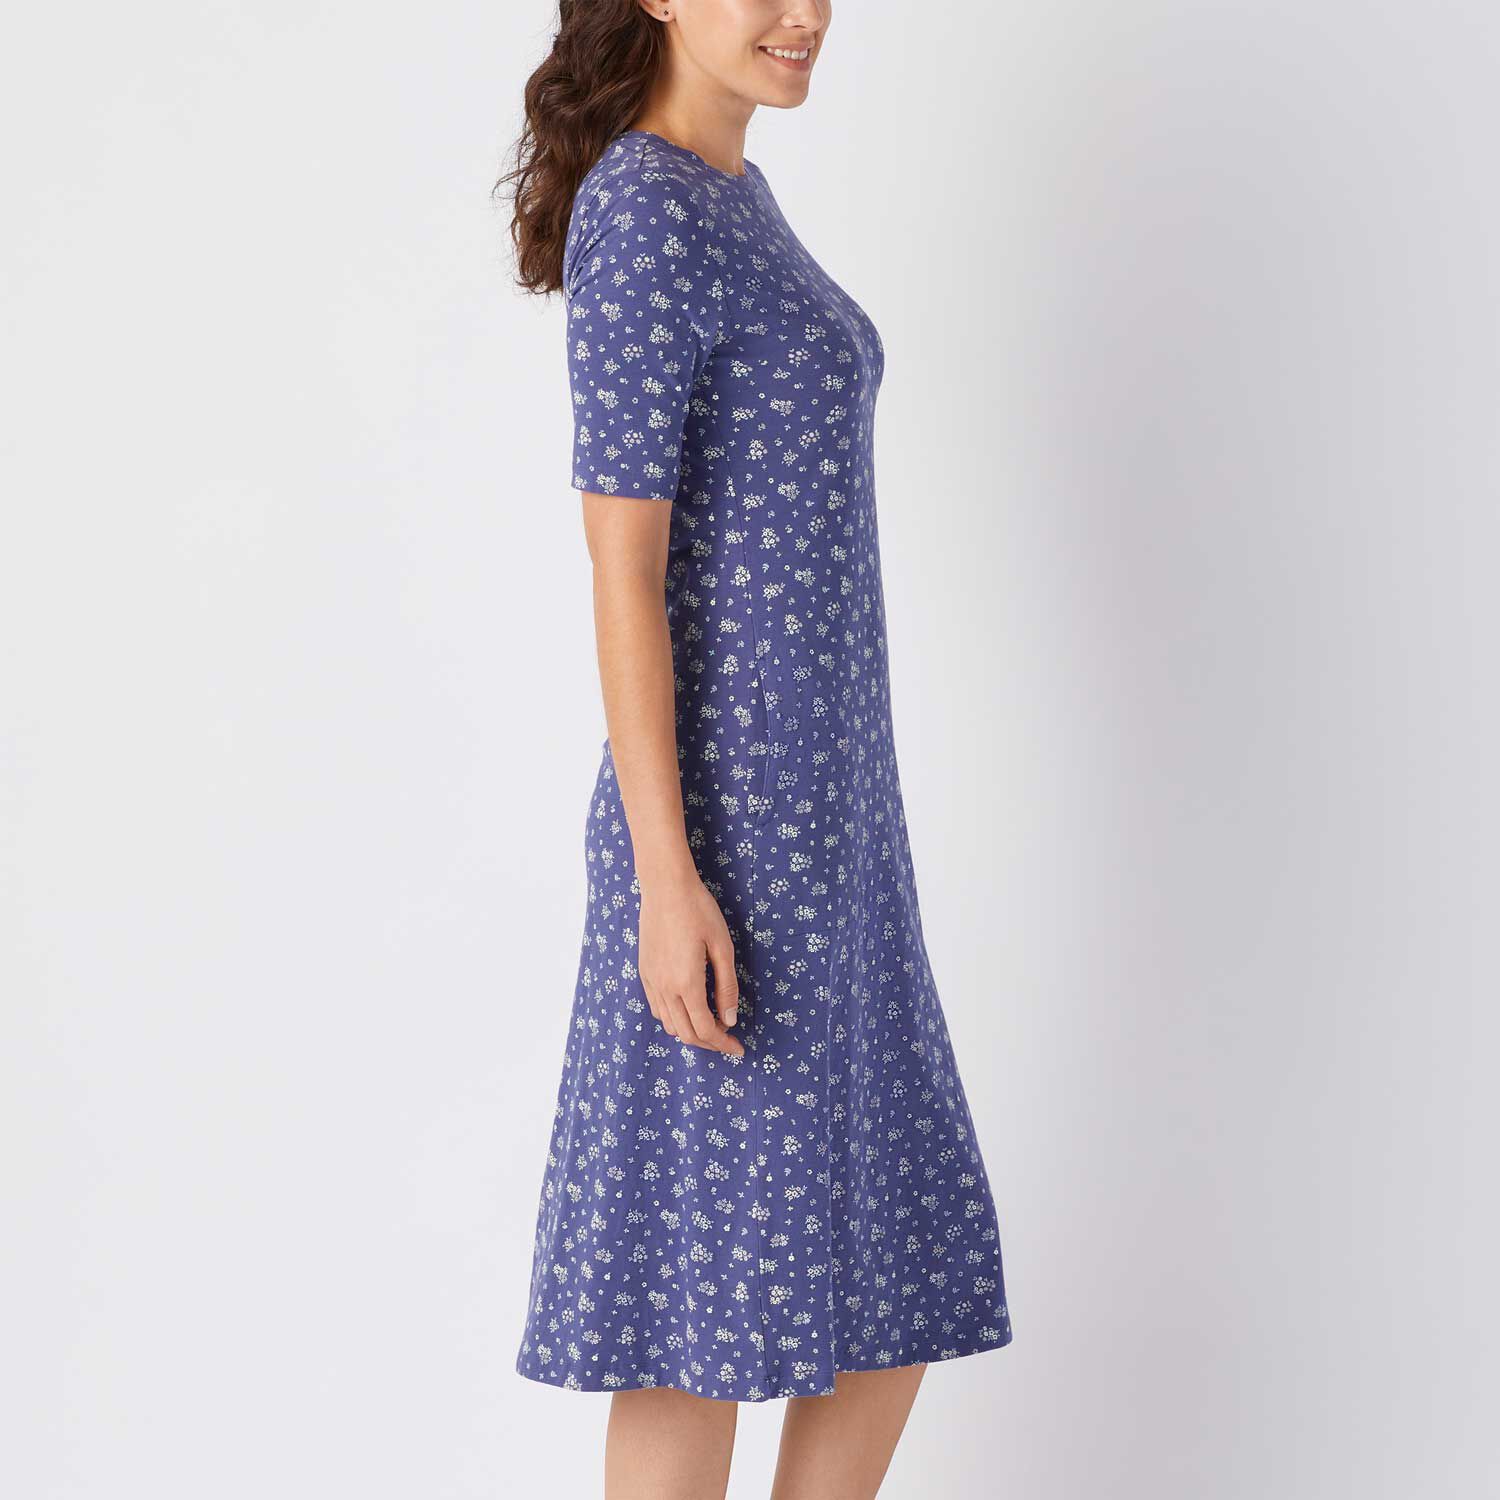 Plus Size Nightgowns for Women Soft Cotton Sleepwear Floral House Dress  Short Sleeve Comfy Night Dress - Walmart.com